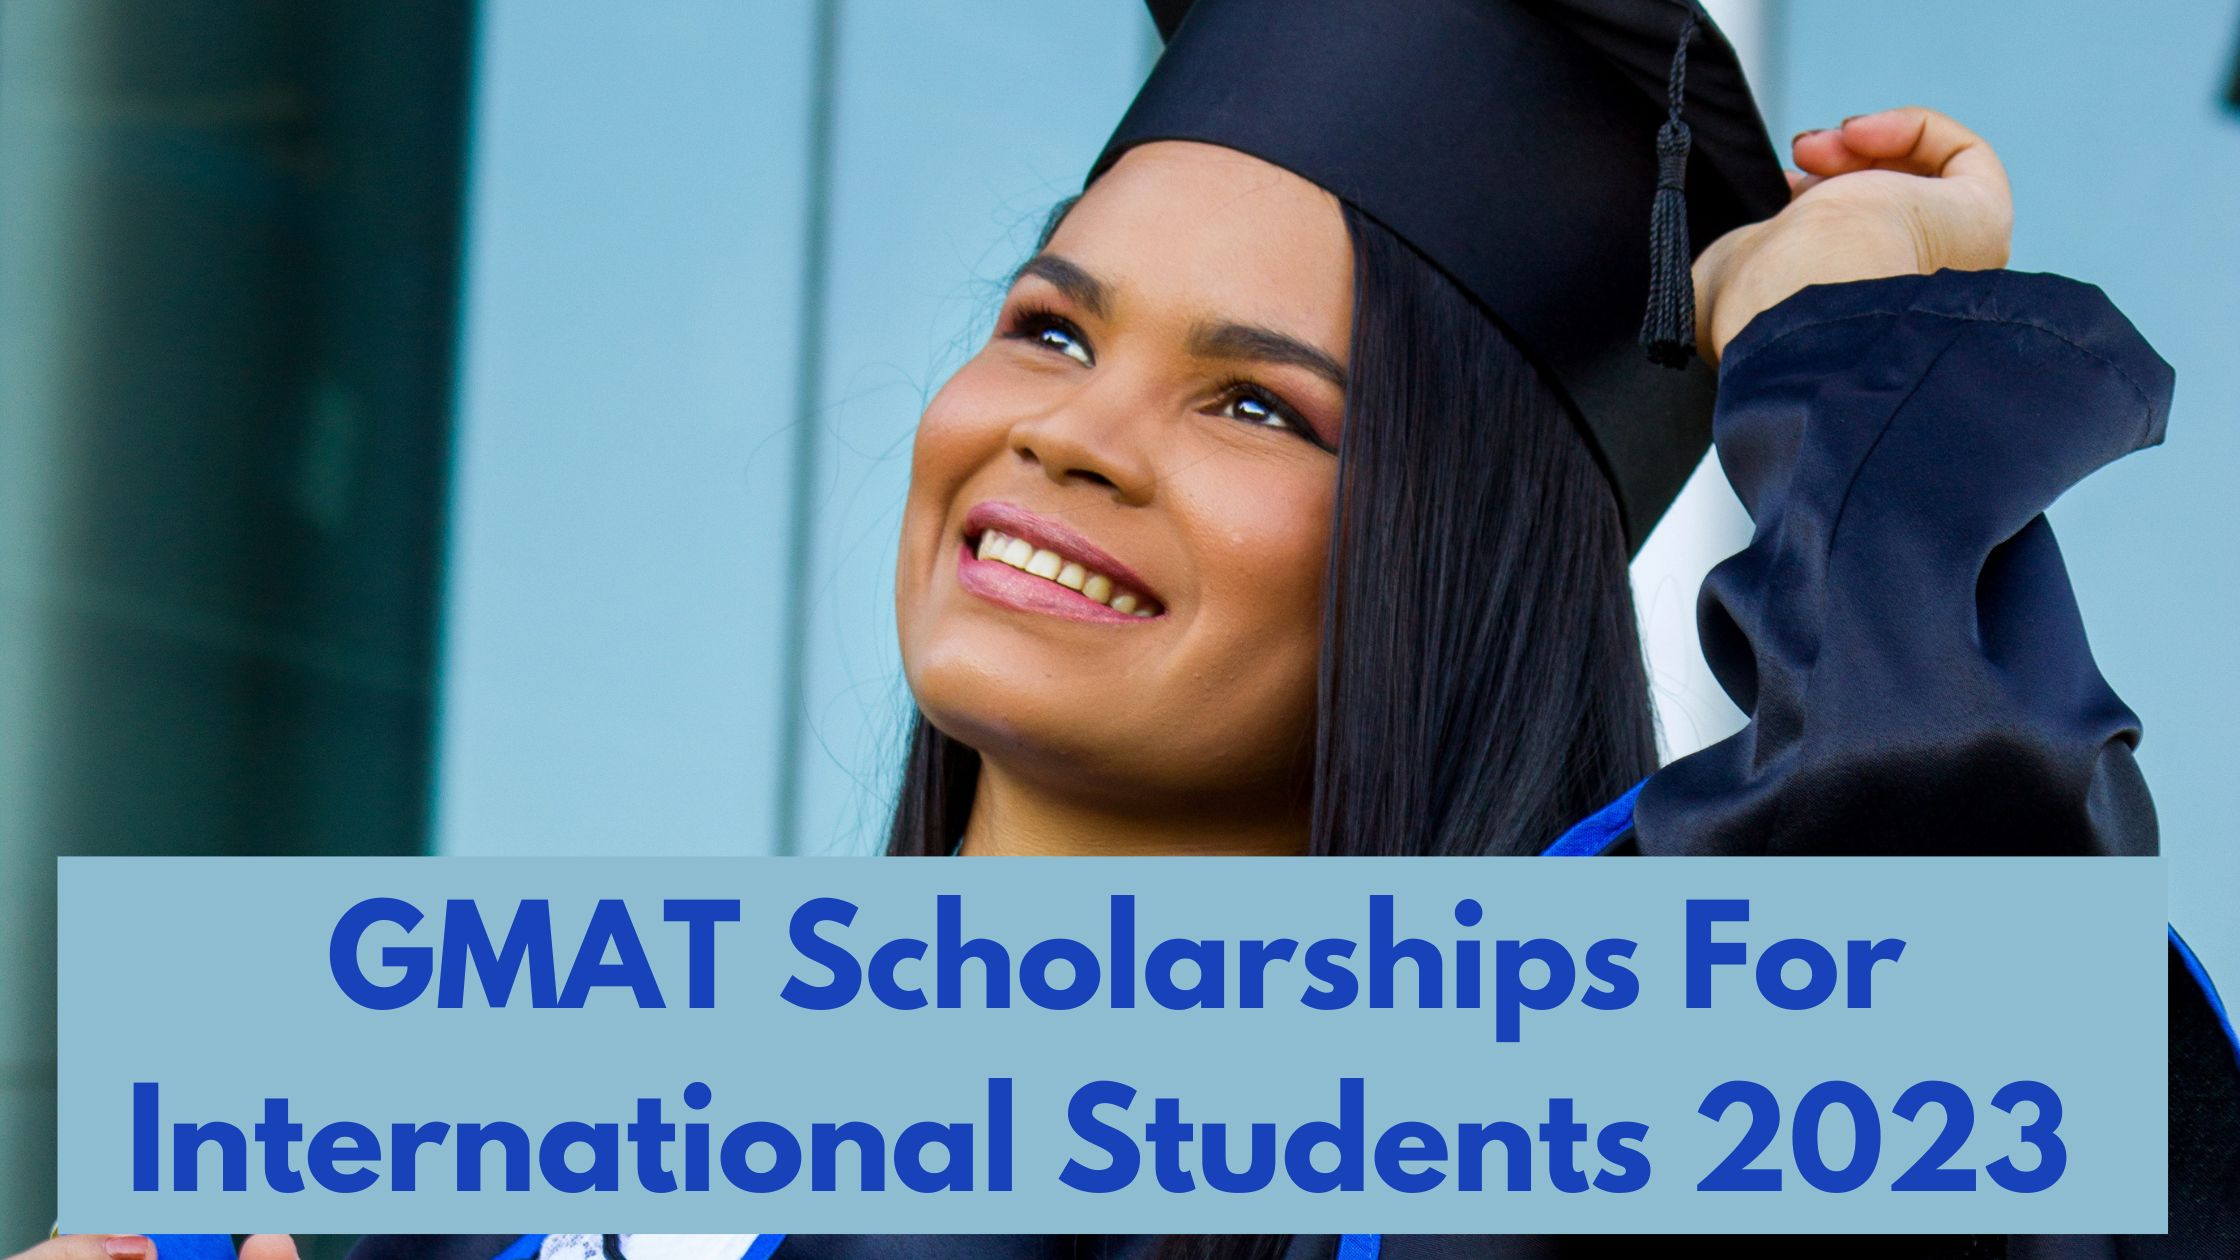 GMAT Scholarships For International Students 2023